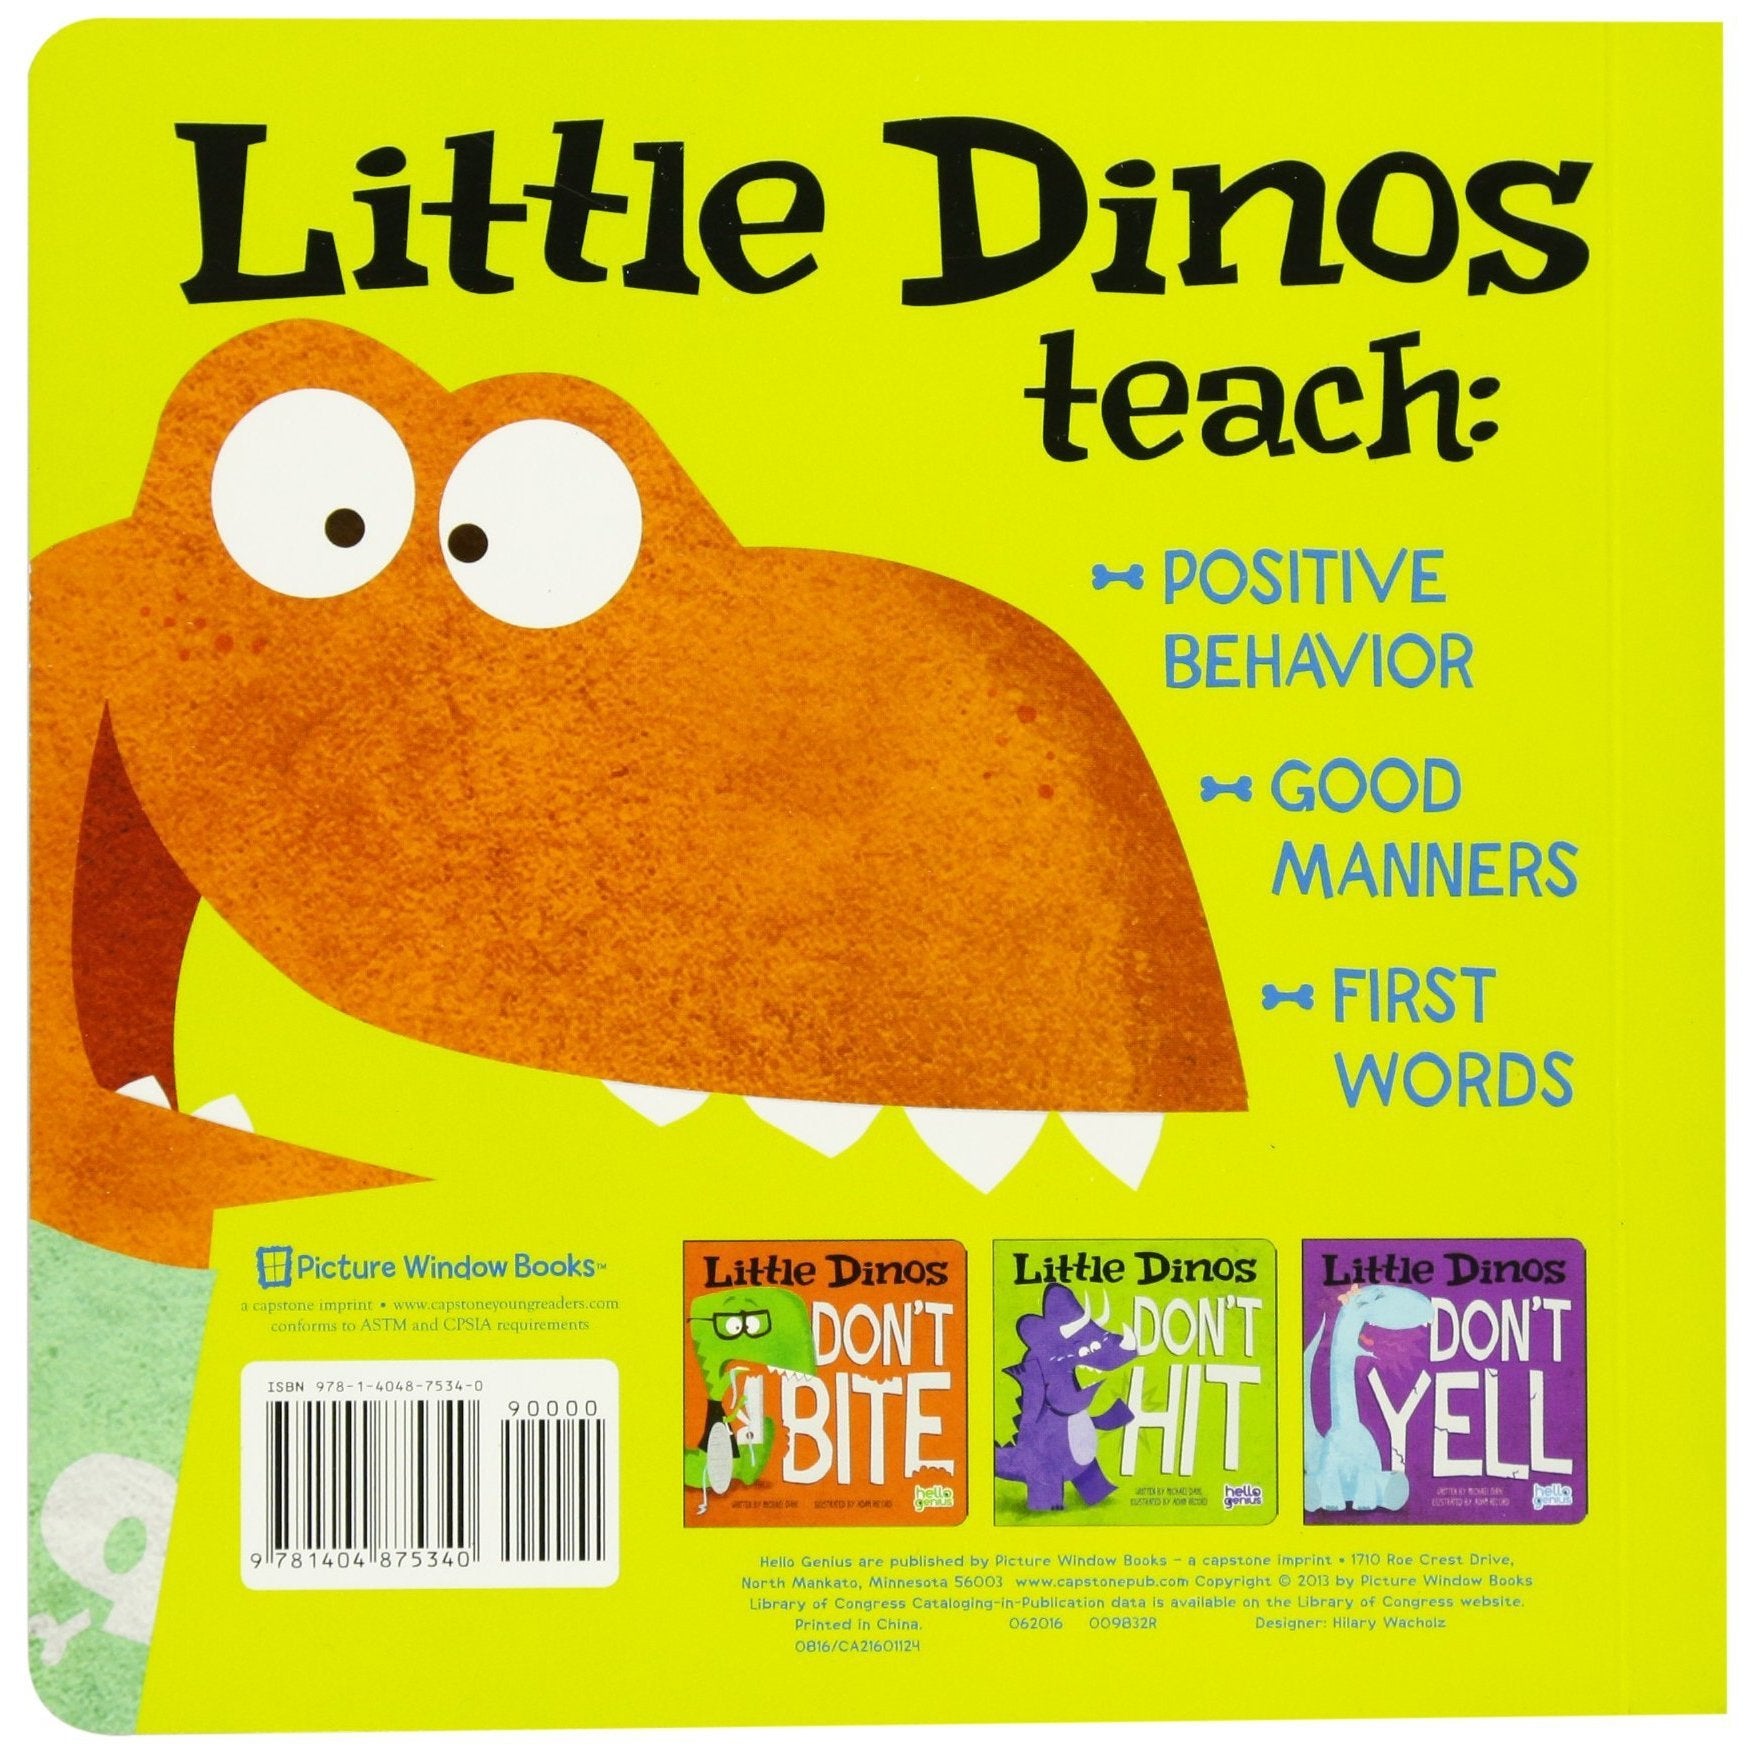 Capstone Publishing: Little Dinos Don't Push (Board Book)-CAPSTONE PUBLISHING-Little Giant Kidz